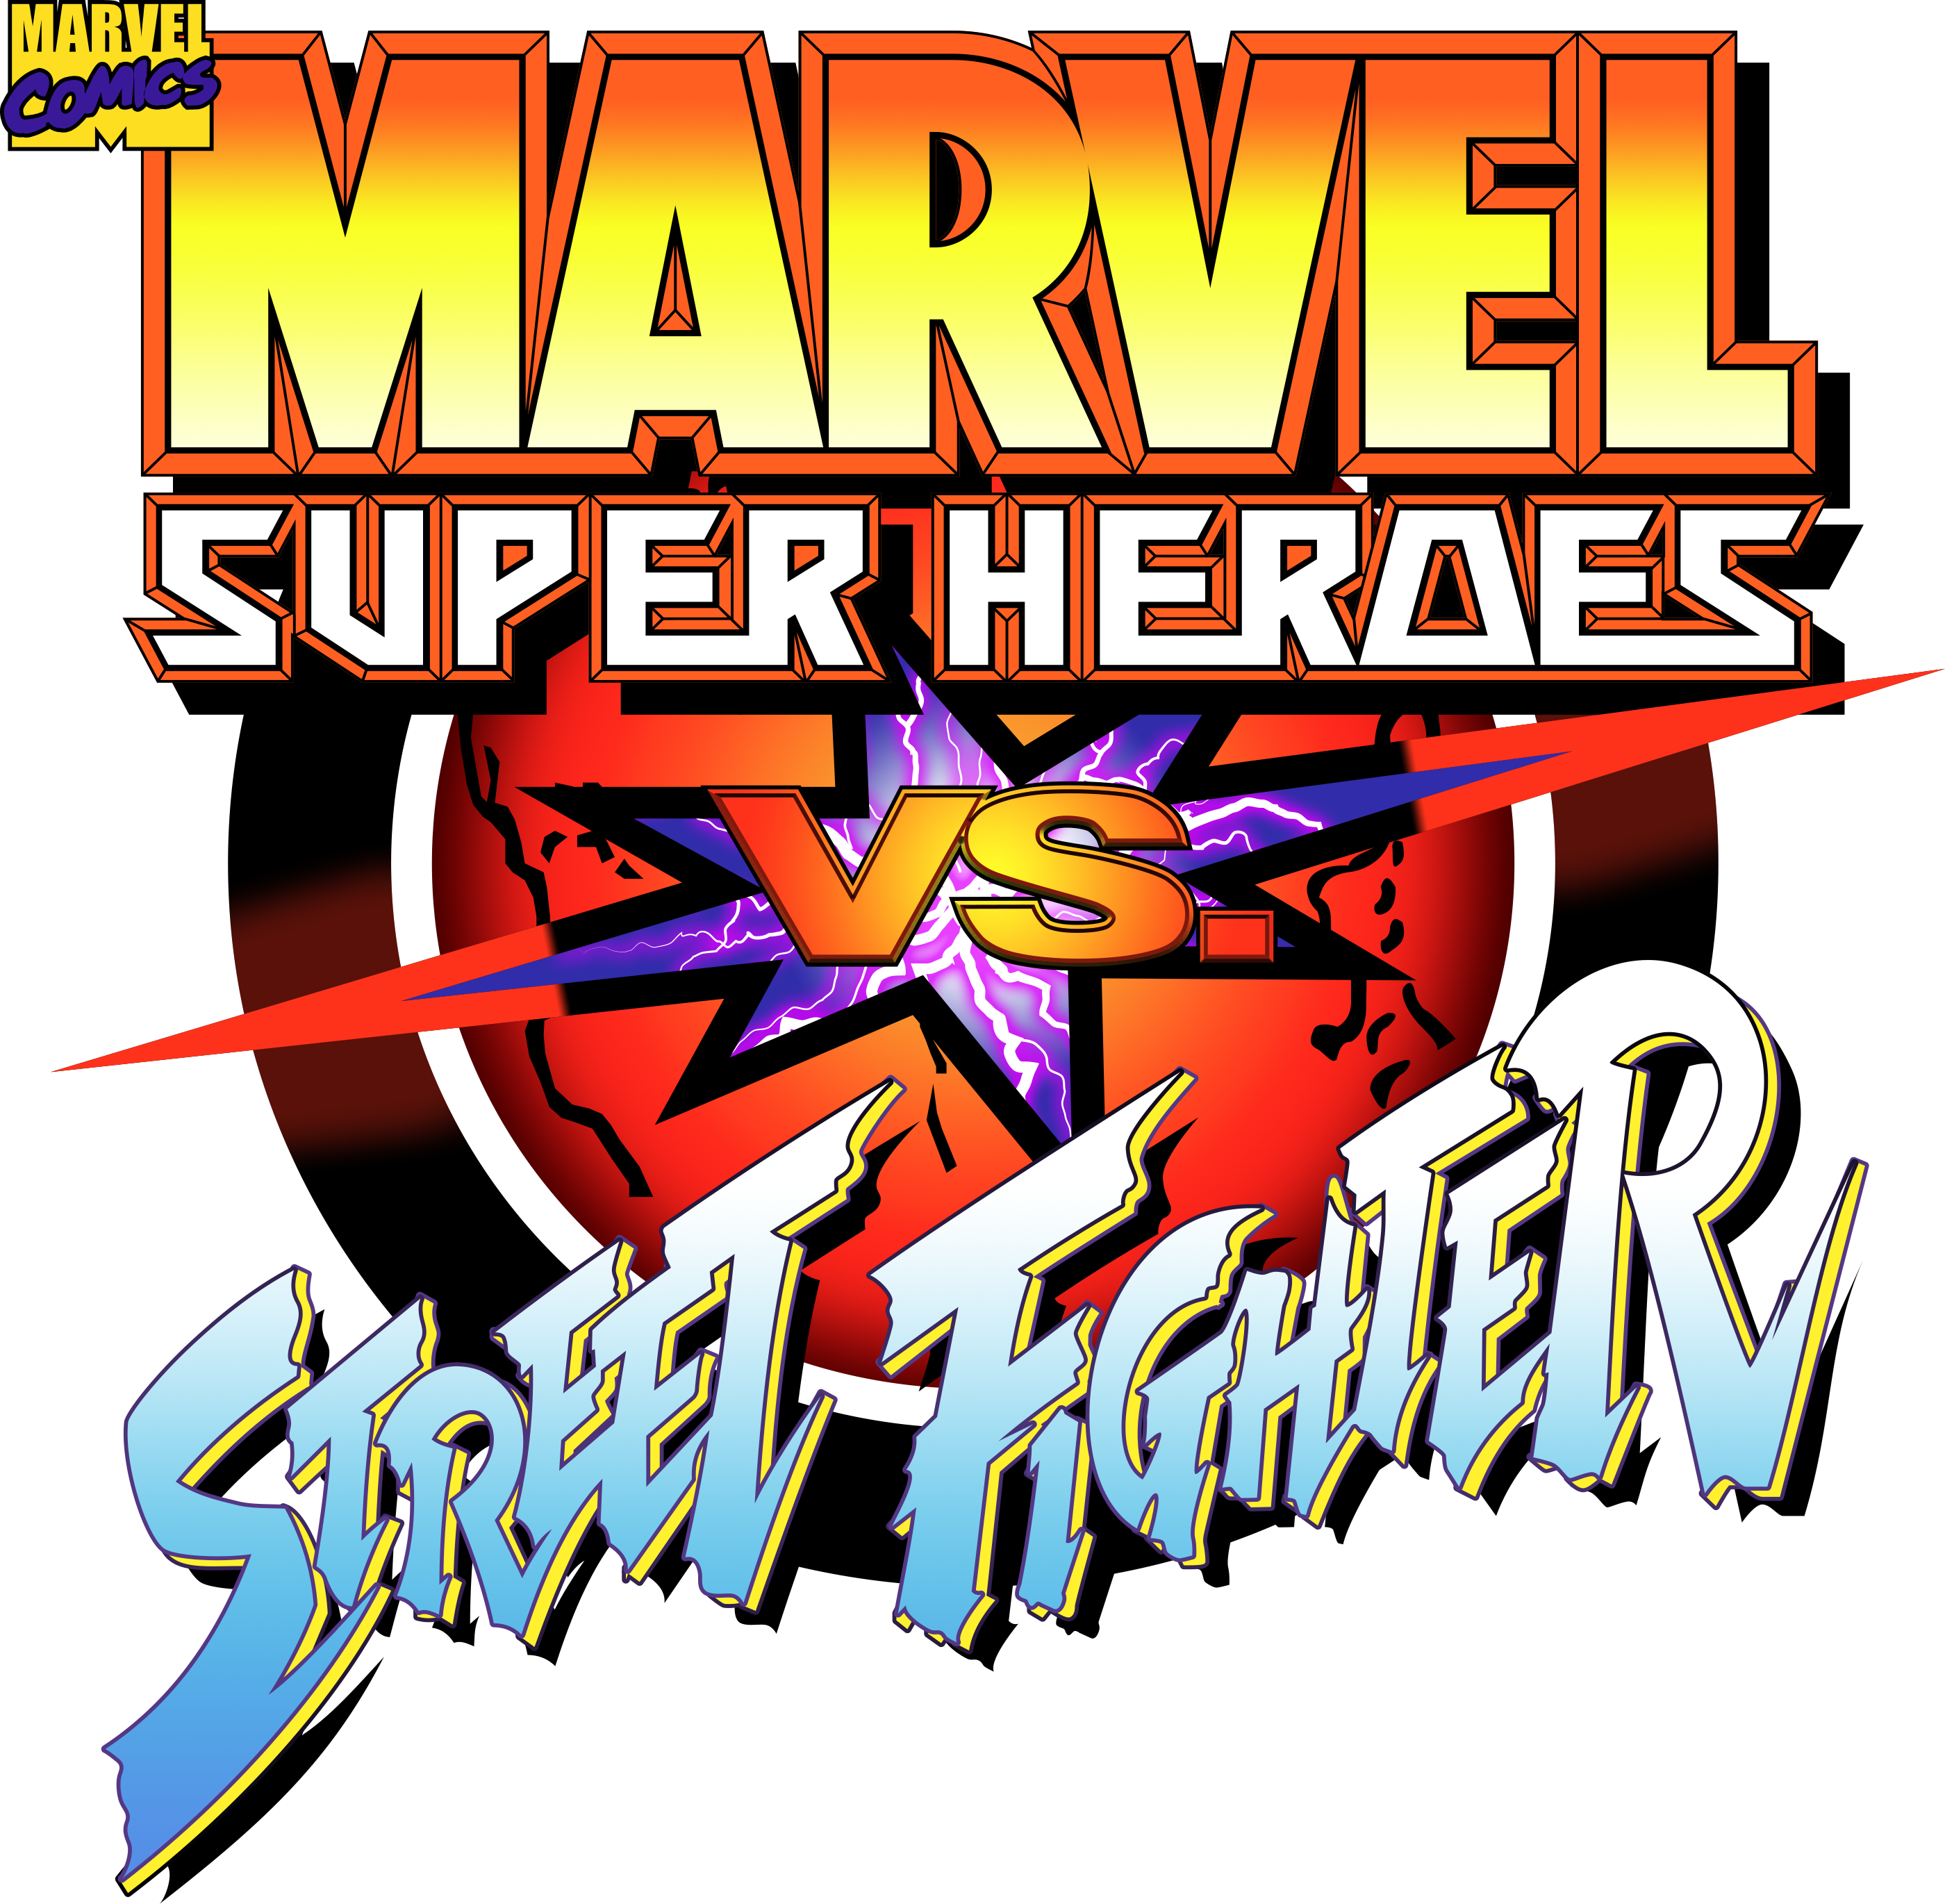 street fighter vs logo